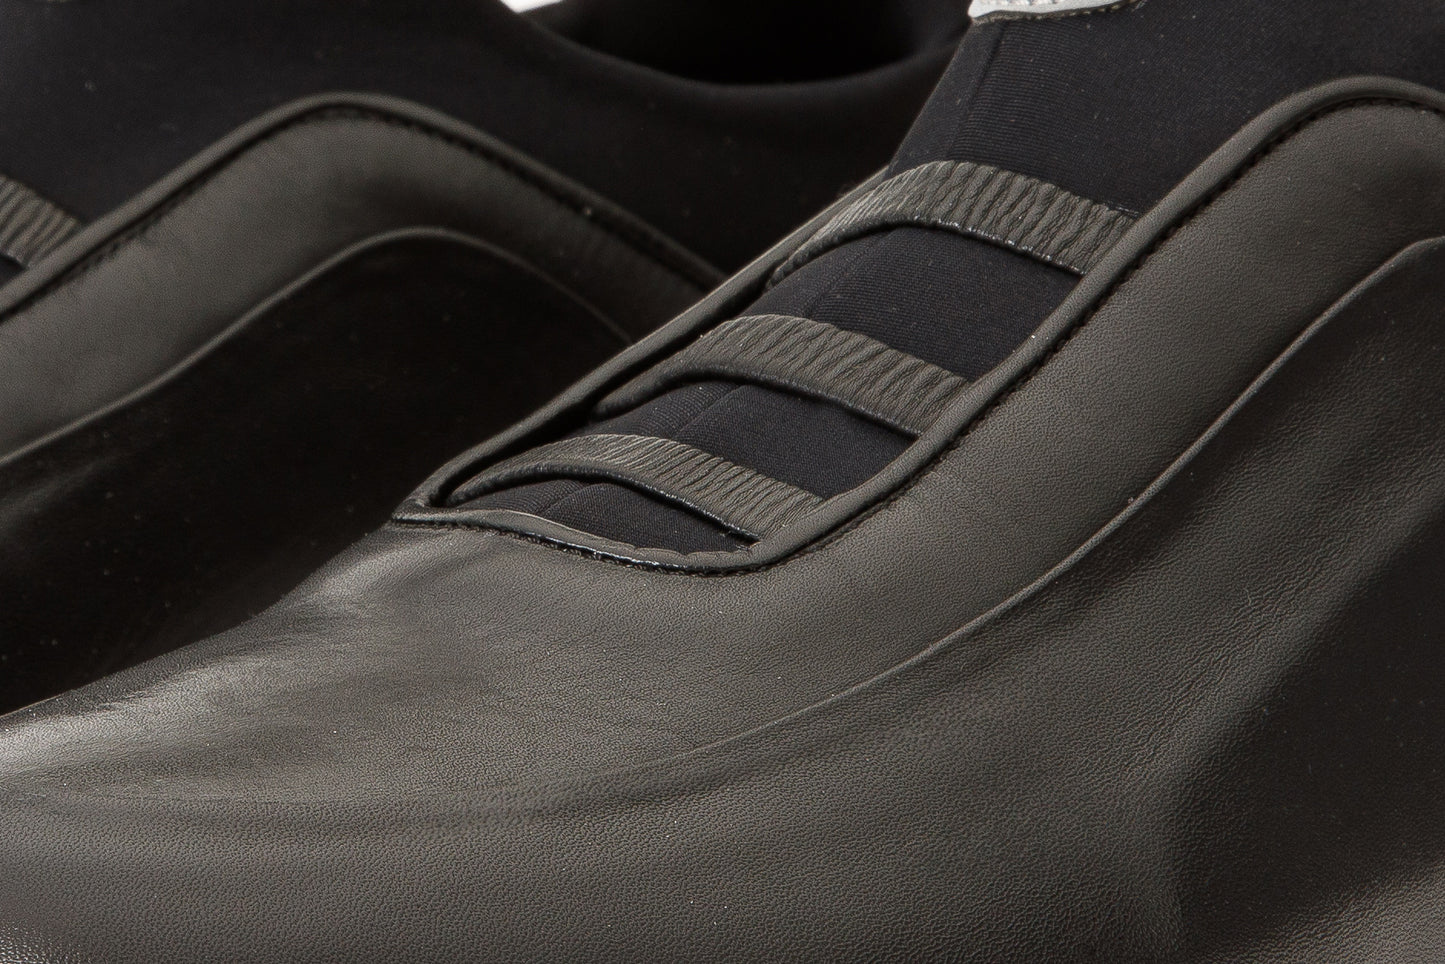 The Sonoma Black Leather Men Sneaker